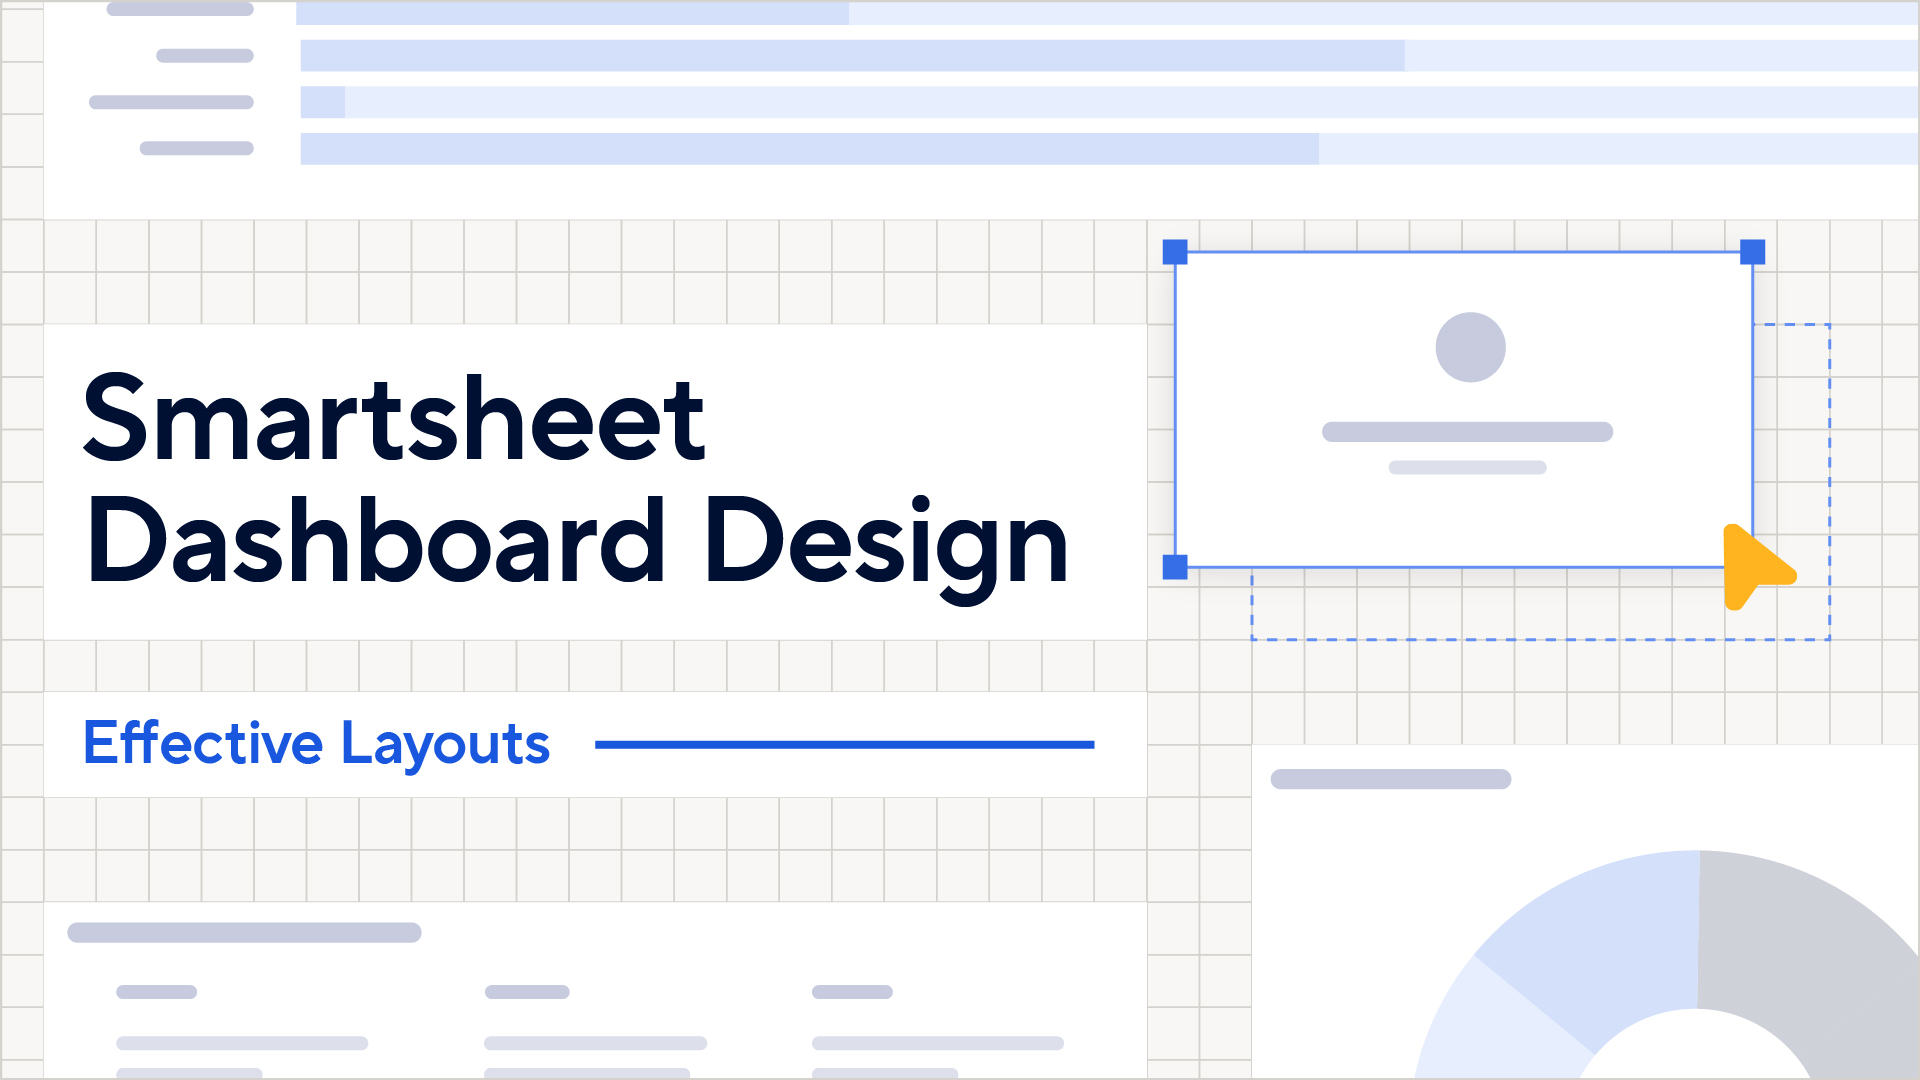 Smartsheet Dashboard Design - Effective Layouts